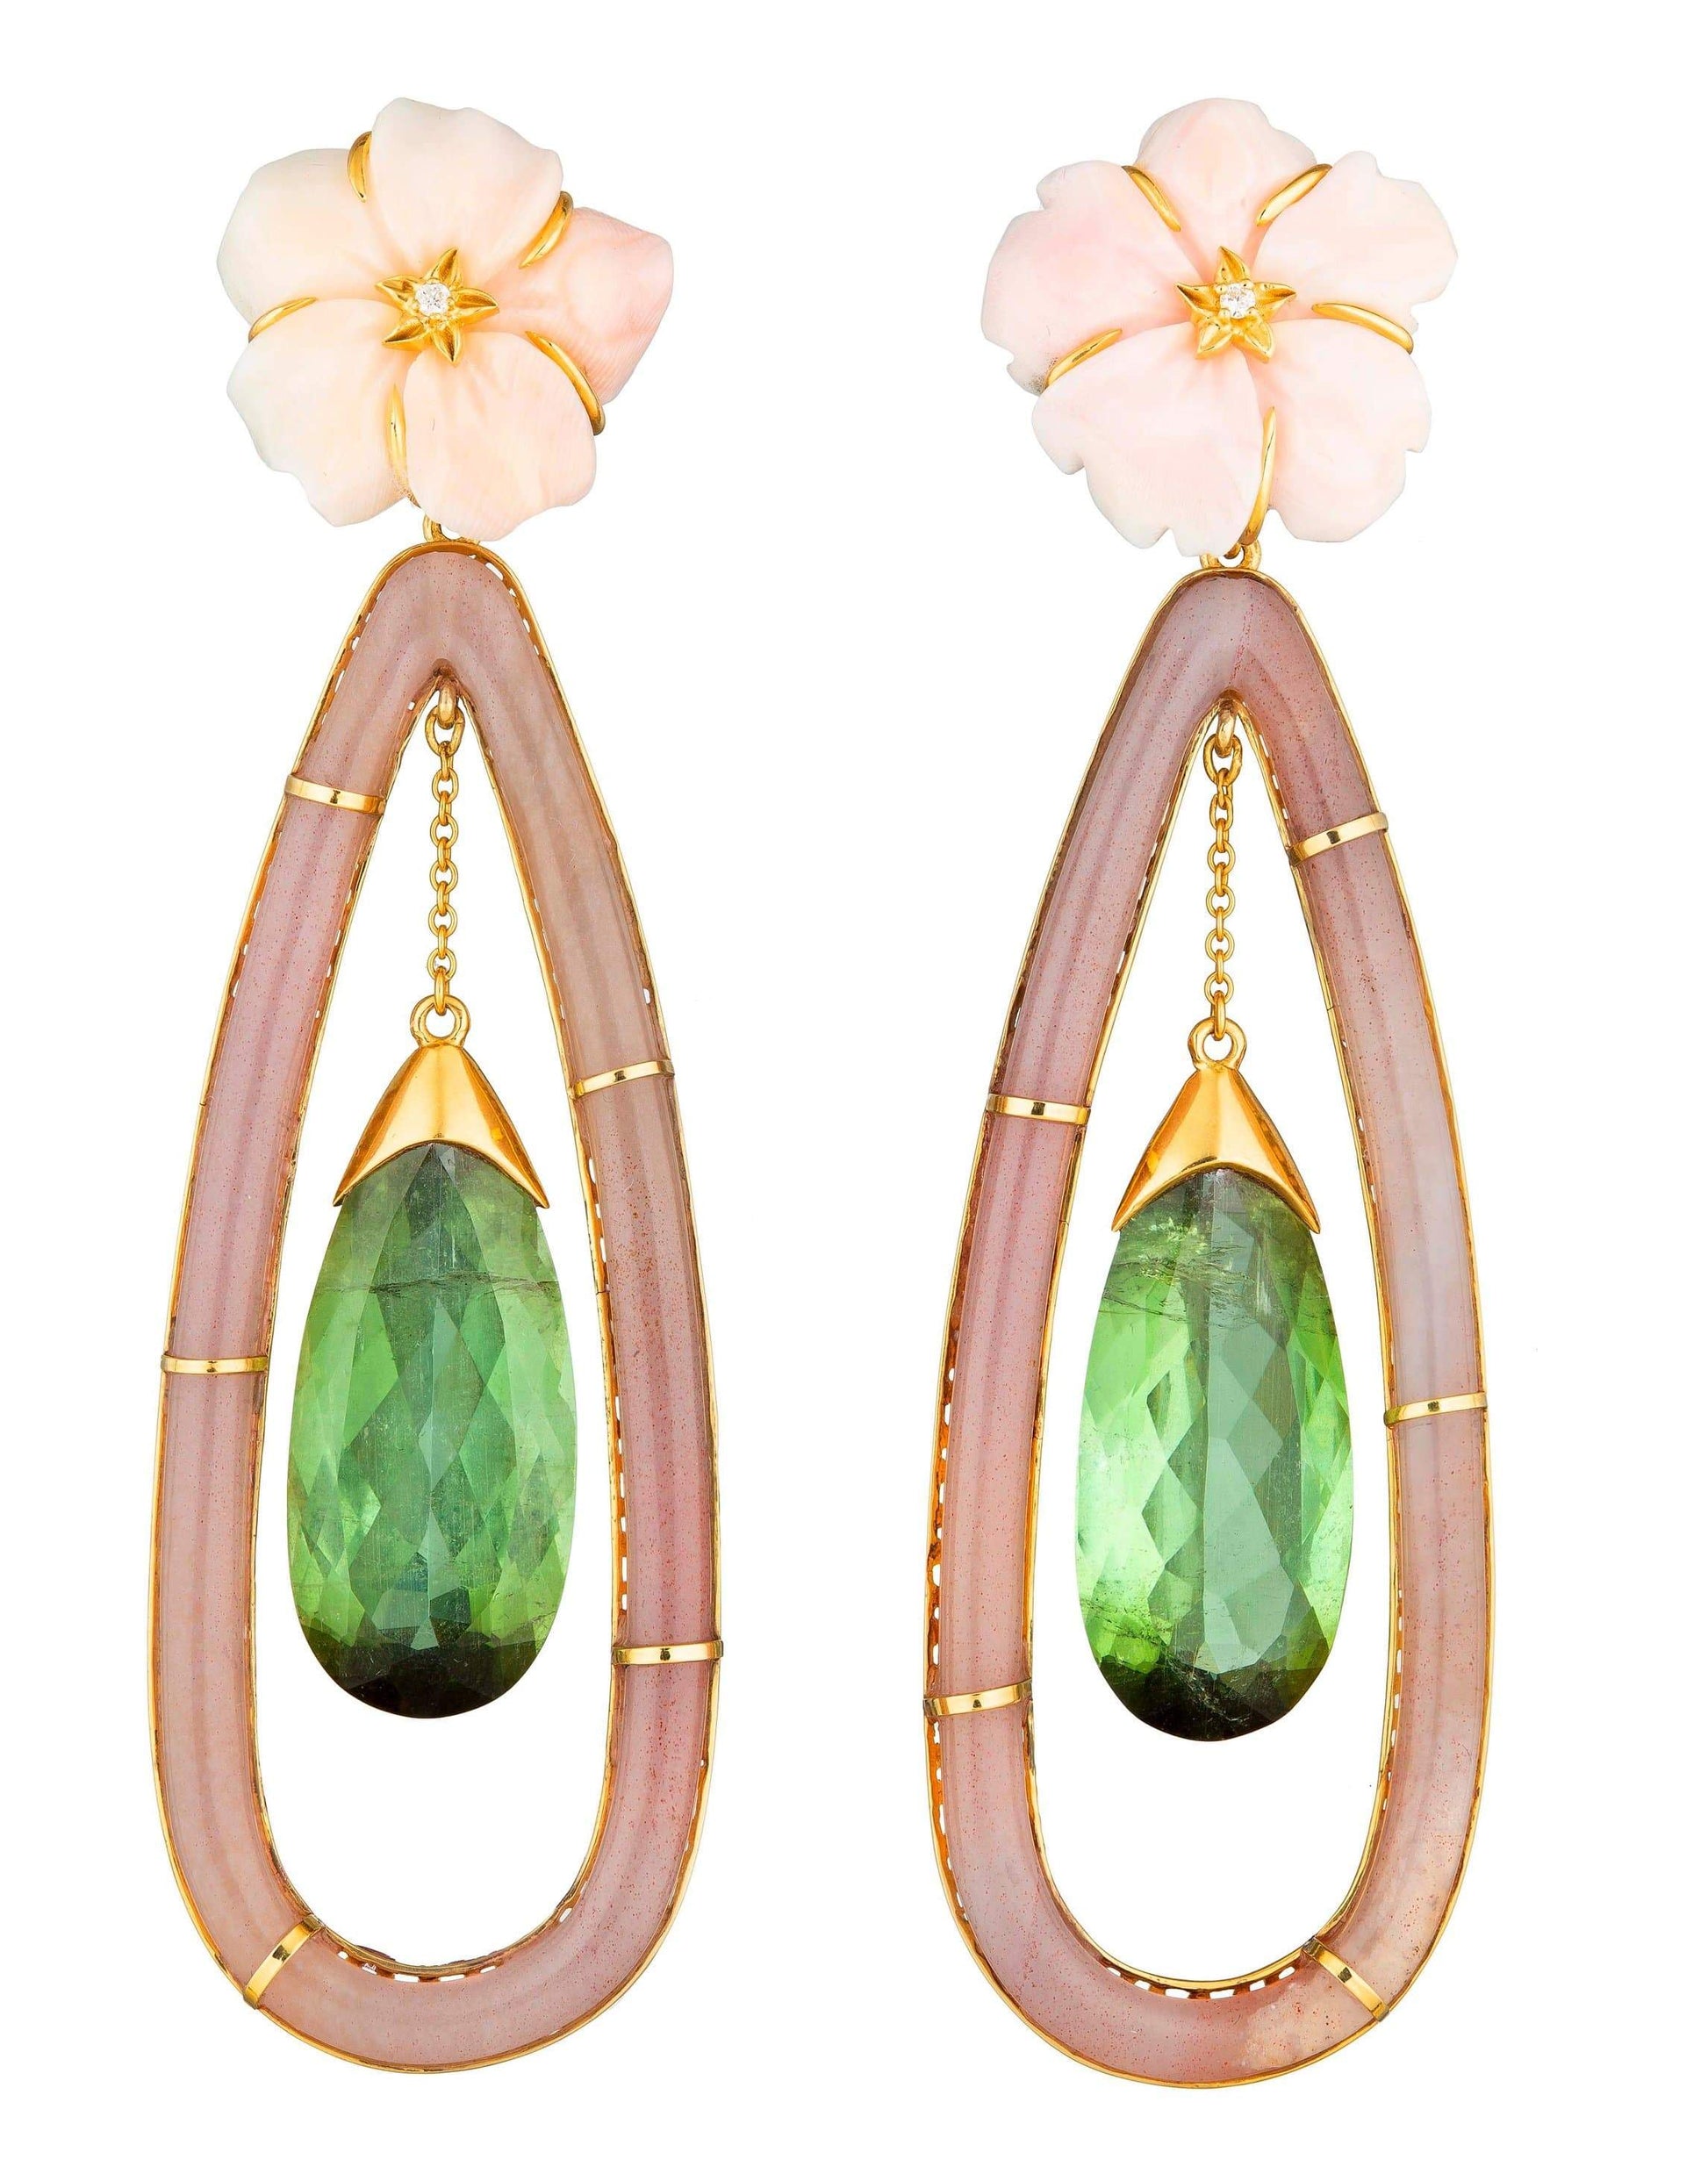 GUITA M-Conch Flower and Green Tourmaline Earrings-YELLOW GOLD